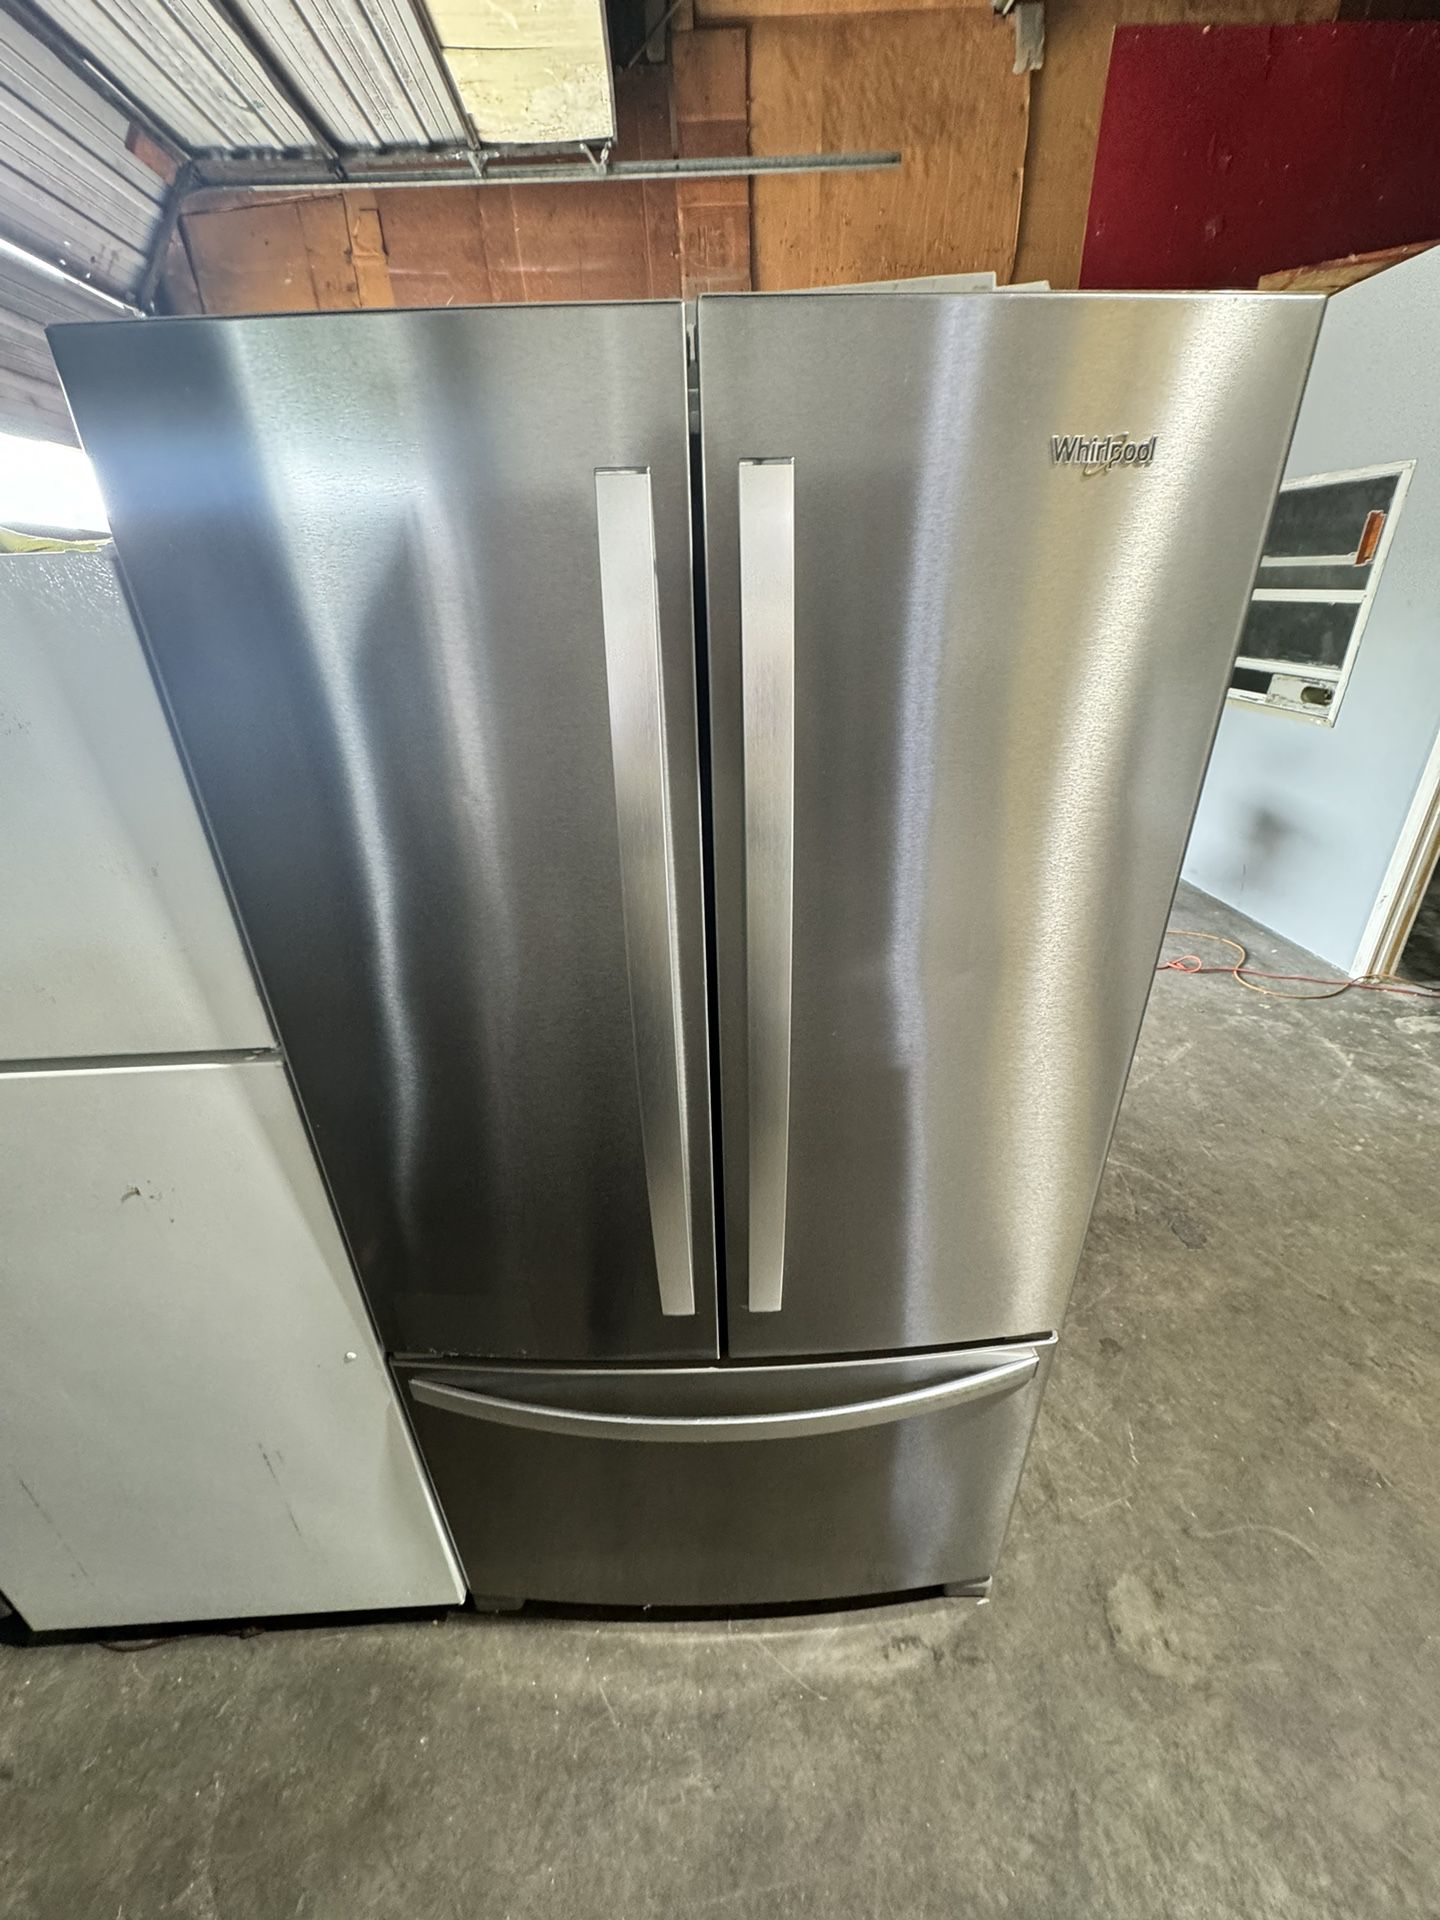 Whirlpool Refrigerator 36 "width Stainless Steel 